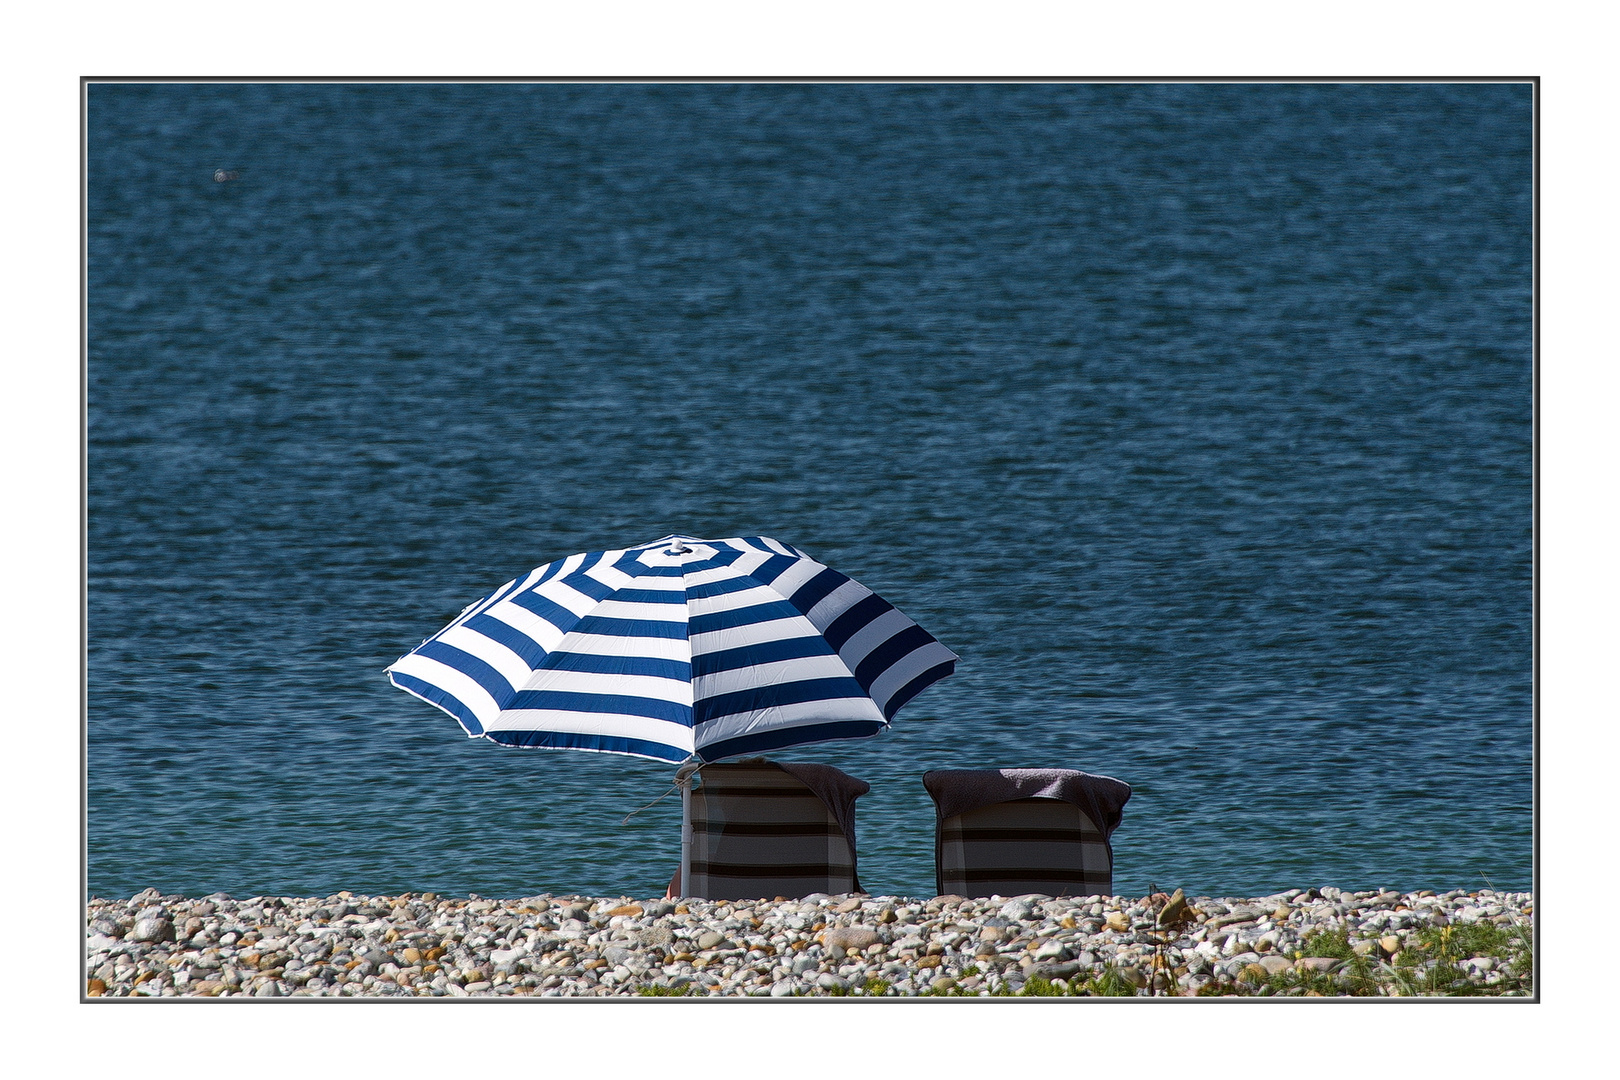 Urlaubstag am Meer (THEMENTAG: Blue Monday)